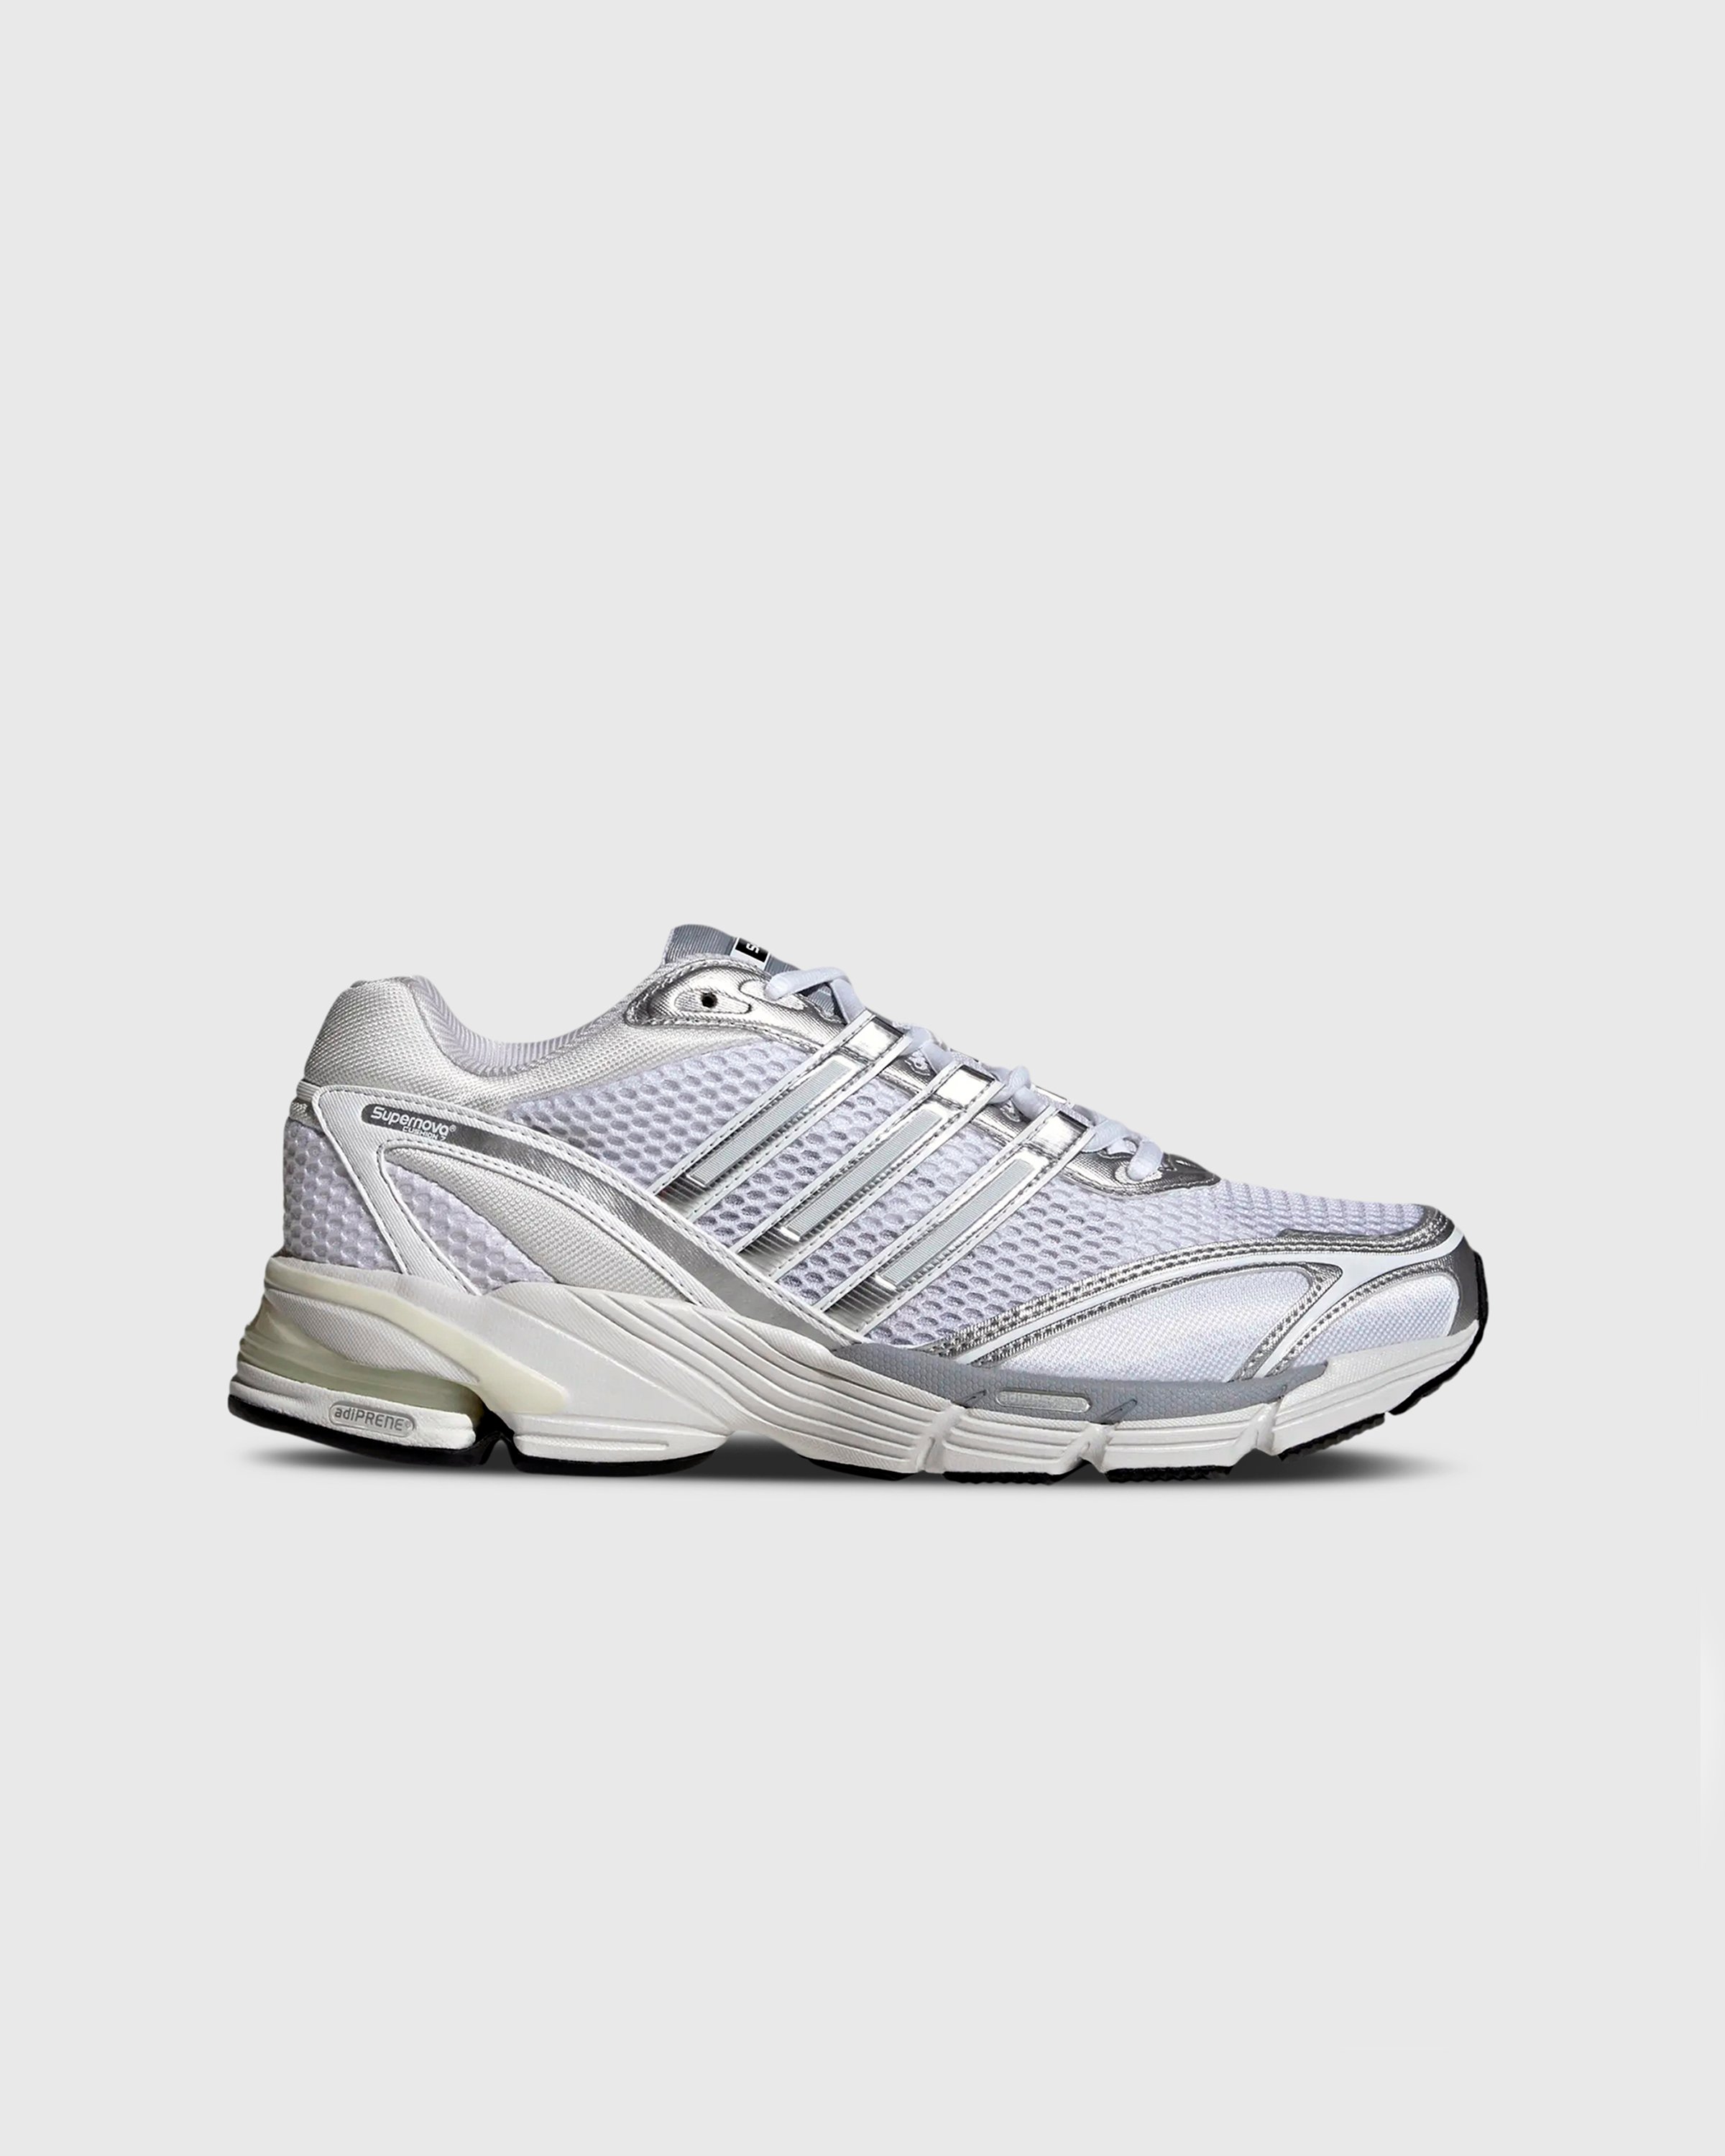 Adidas - SUPERNOVA CUSHION 7 FTWWHT/SILVMT/CRYWHT - Footwear - White - Image 1